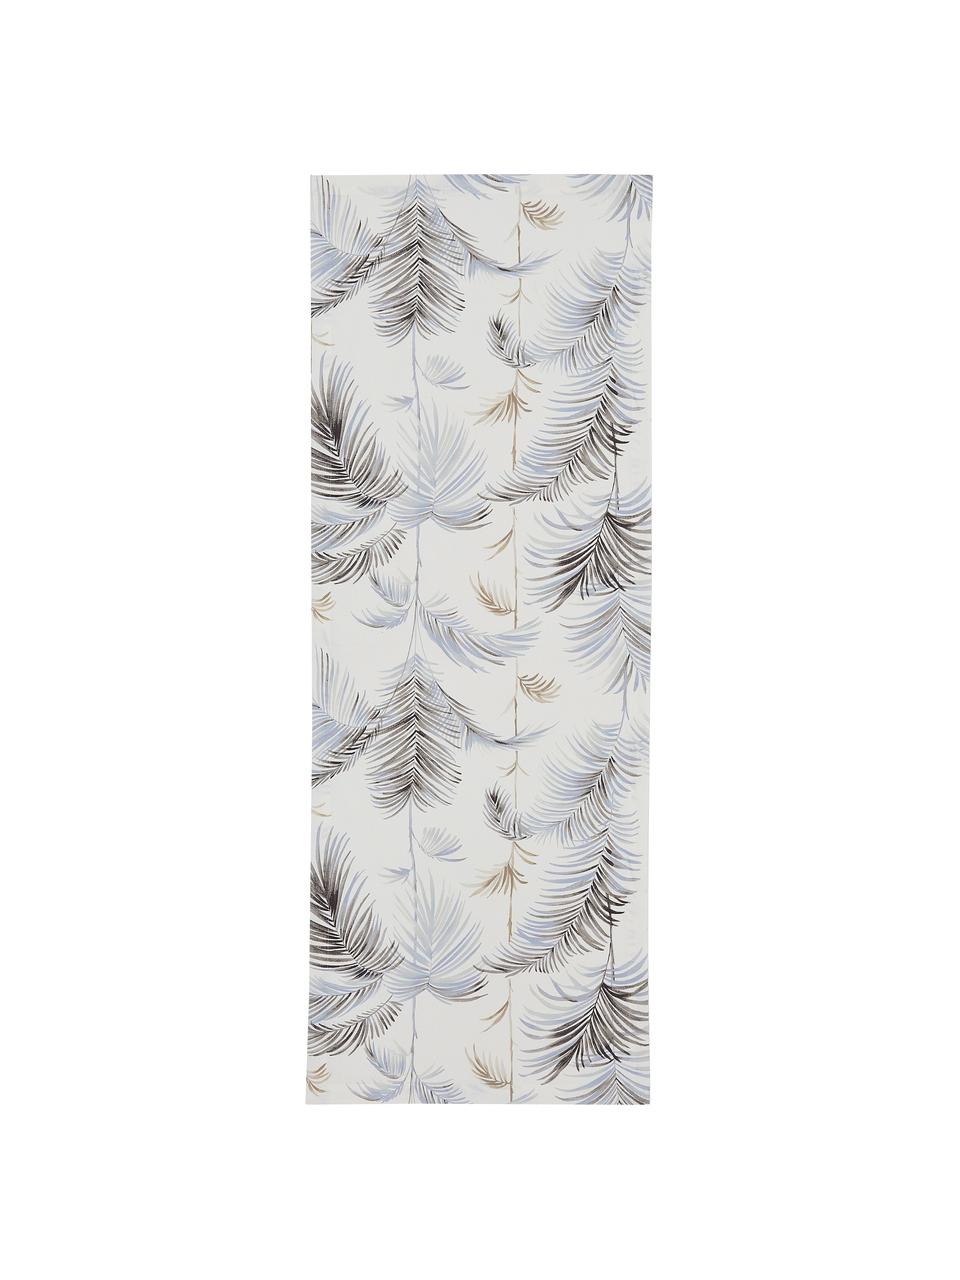 Chemin de table motif palmier Sahara, 100 % coton, Bleu, larg. 80 x long. 80 cm